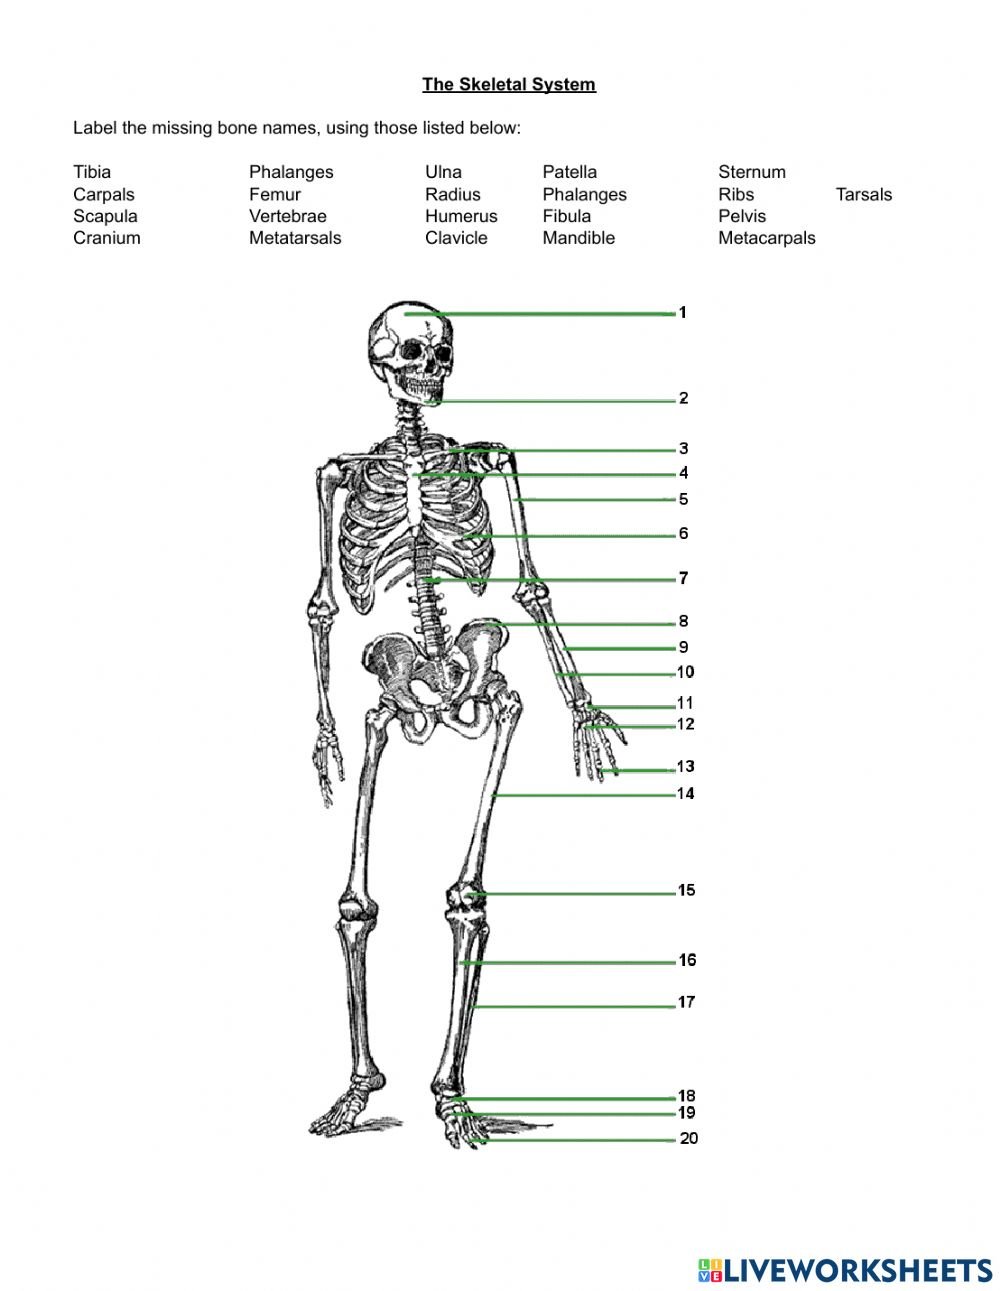 Задания по скелету. Скелет человека без названия костей. Строение скелета человека. Скелет с названиями костей. Скелет человека с подписями.